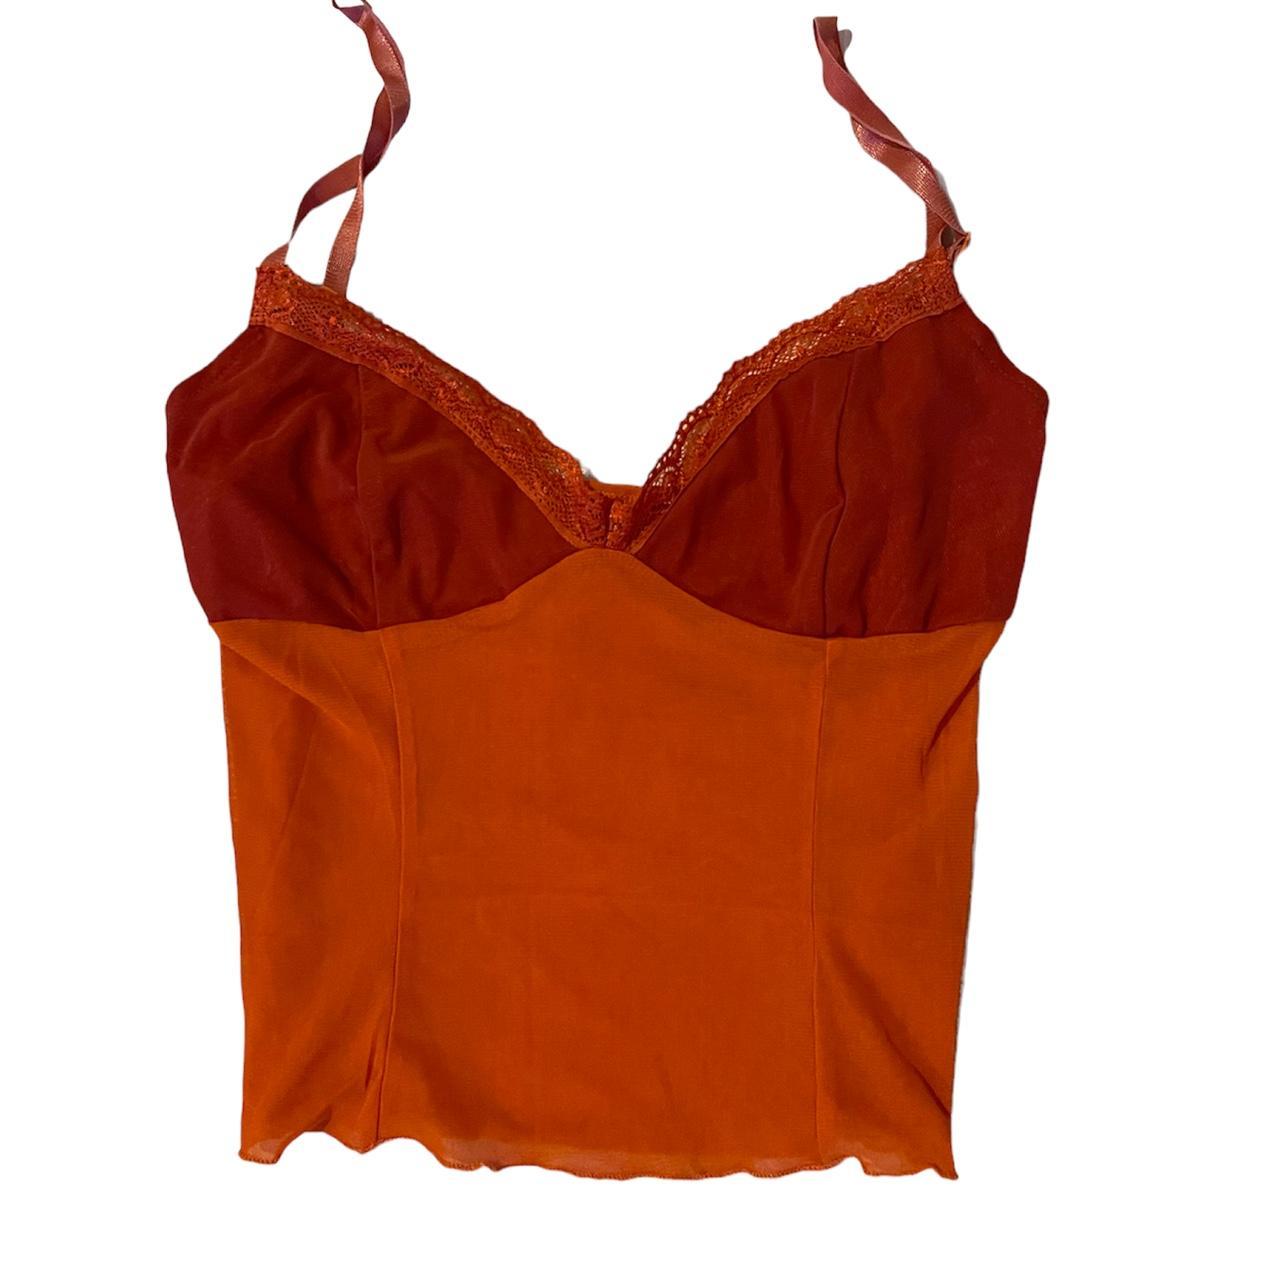 A. Saks Women's Orange and Red Vests-tanks-camis